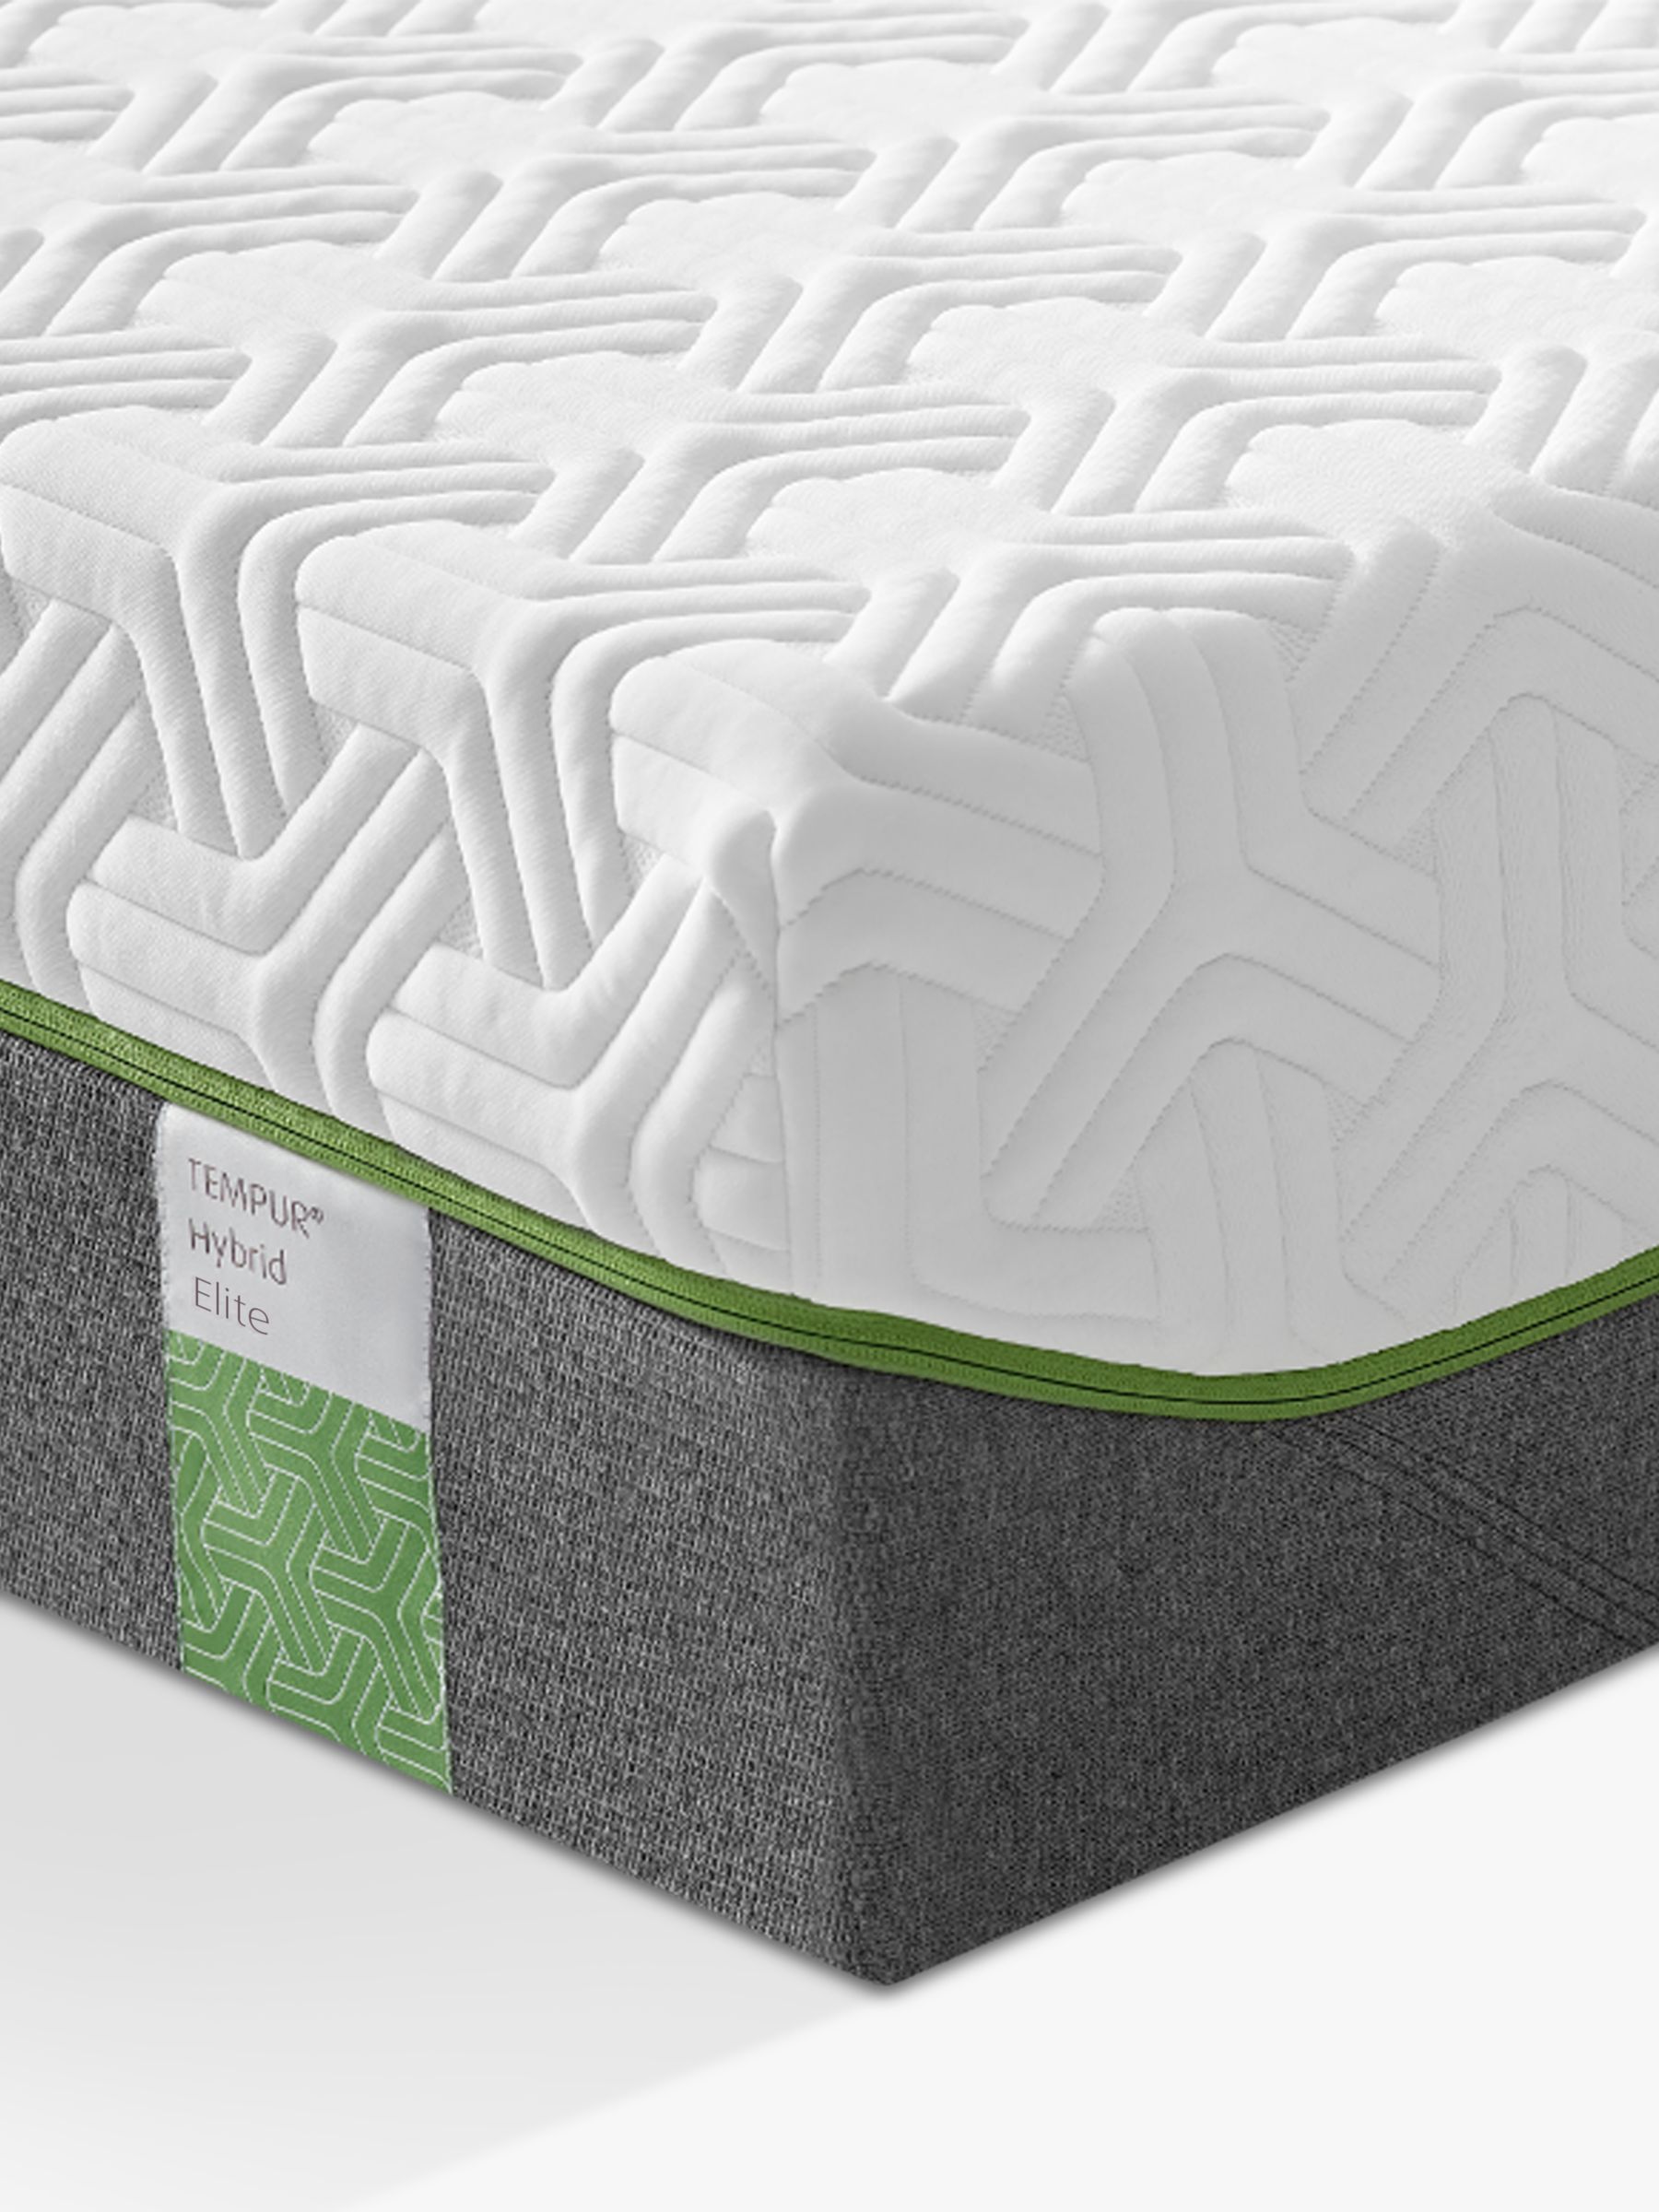 Photo of Tempur® hybrid elite pocket spring memory foam mattress medium tension extra long single